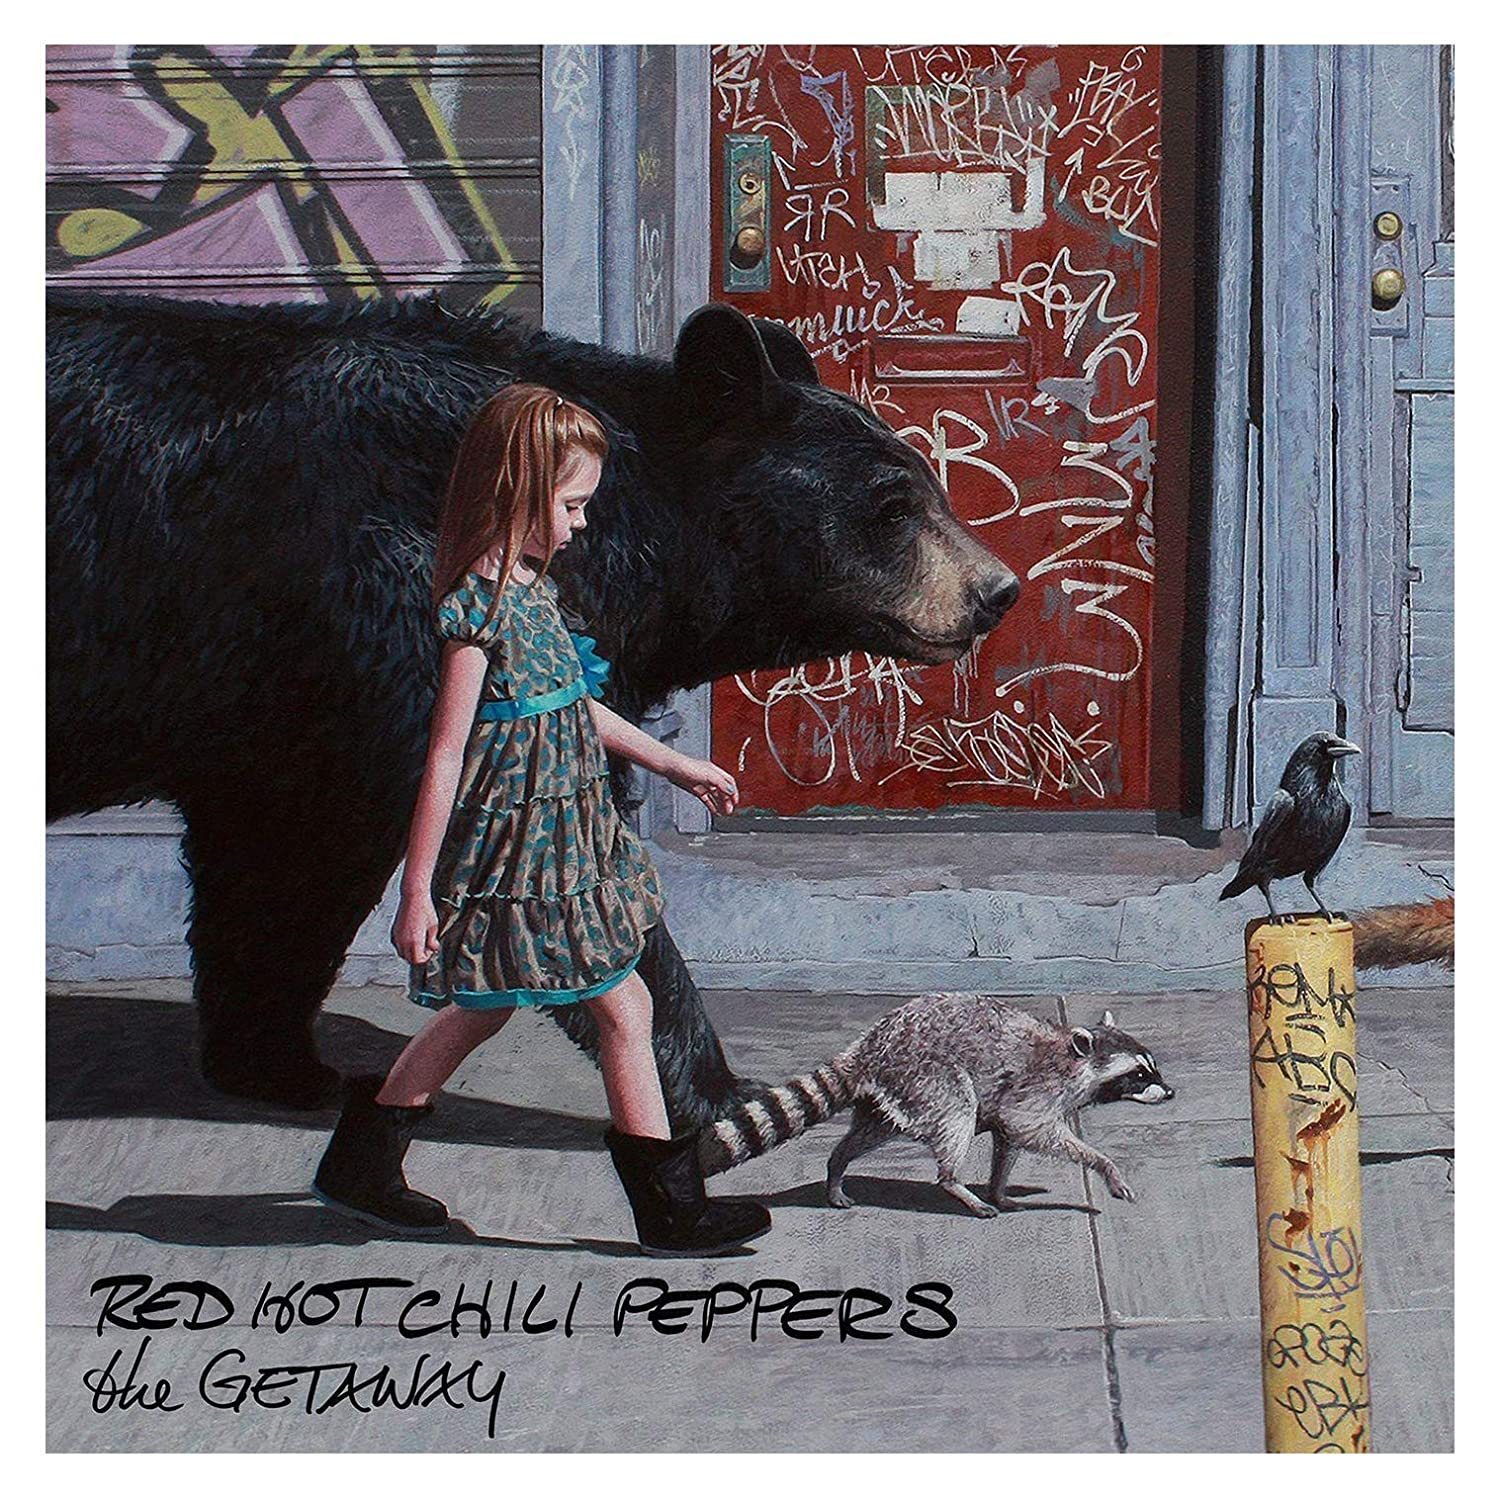 Chili peppers dark necessities. The Getaway альбом Red hot Chili Peppers. Red hot Chili Peppers the Getaway 2016. RHCP обложки альбомов. RHCP the Getaway альбом.